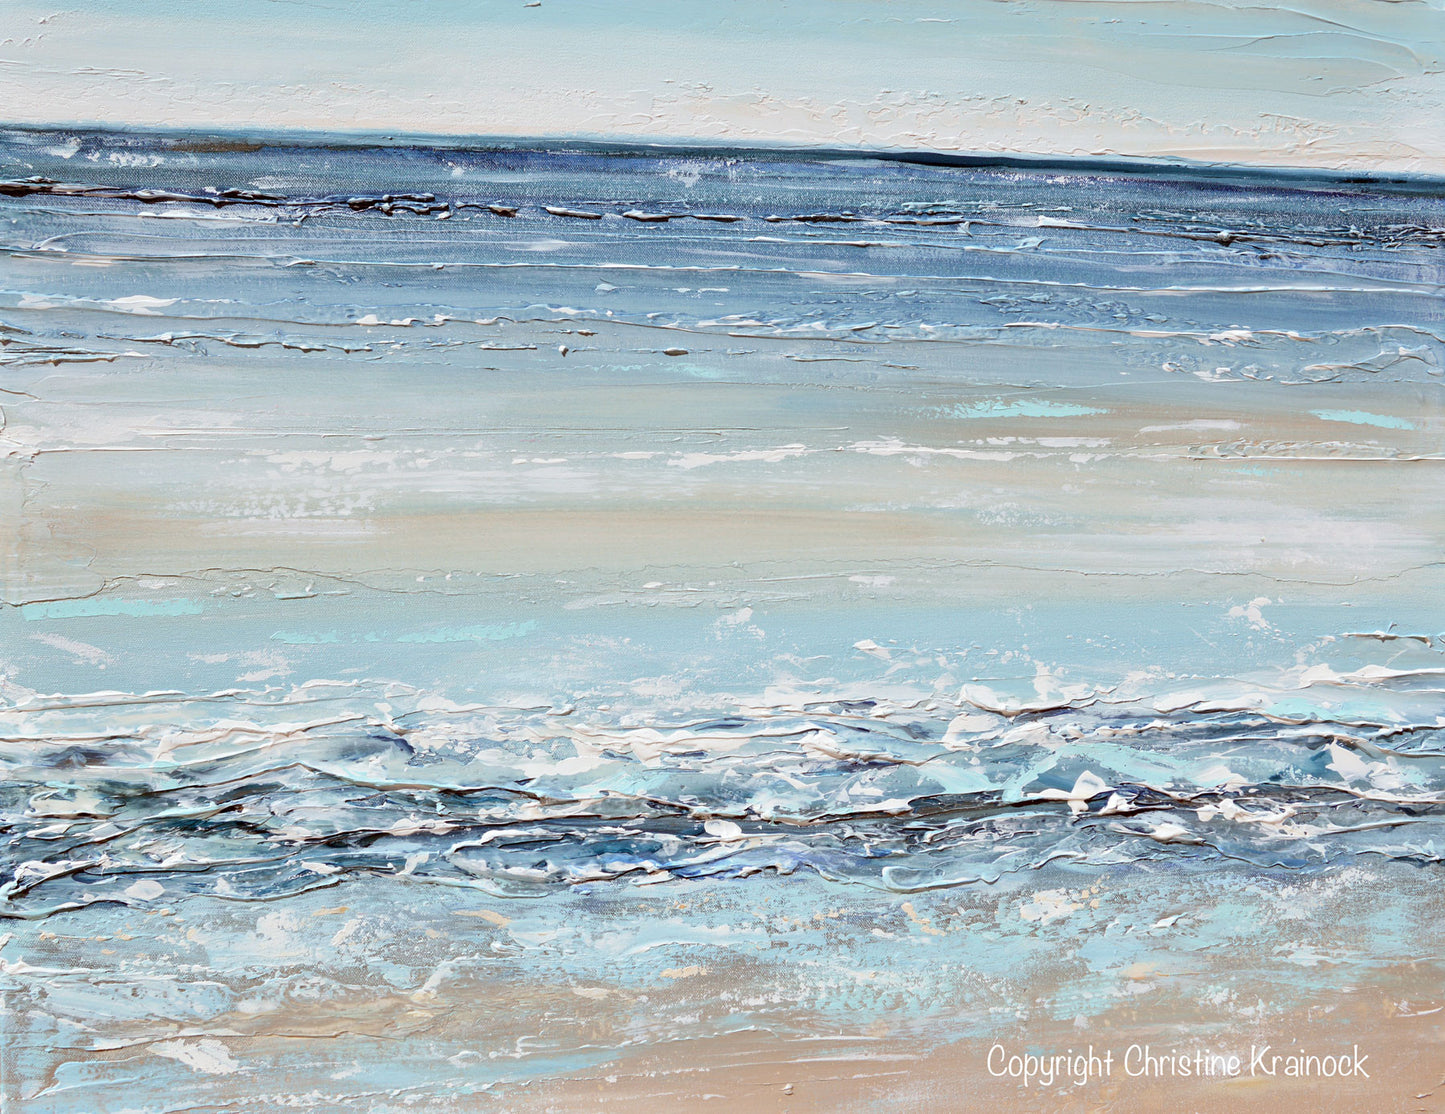 GICLEE PRINT Art Abstract Painting Seascape Beach Ocean Blue White Grey Beige Coastal Canvas Art